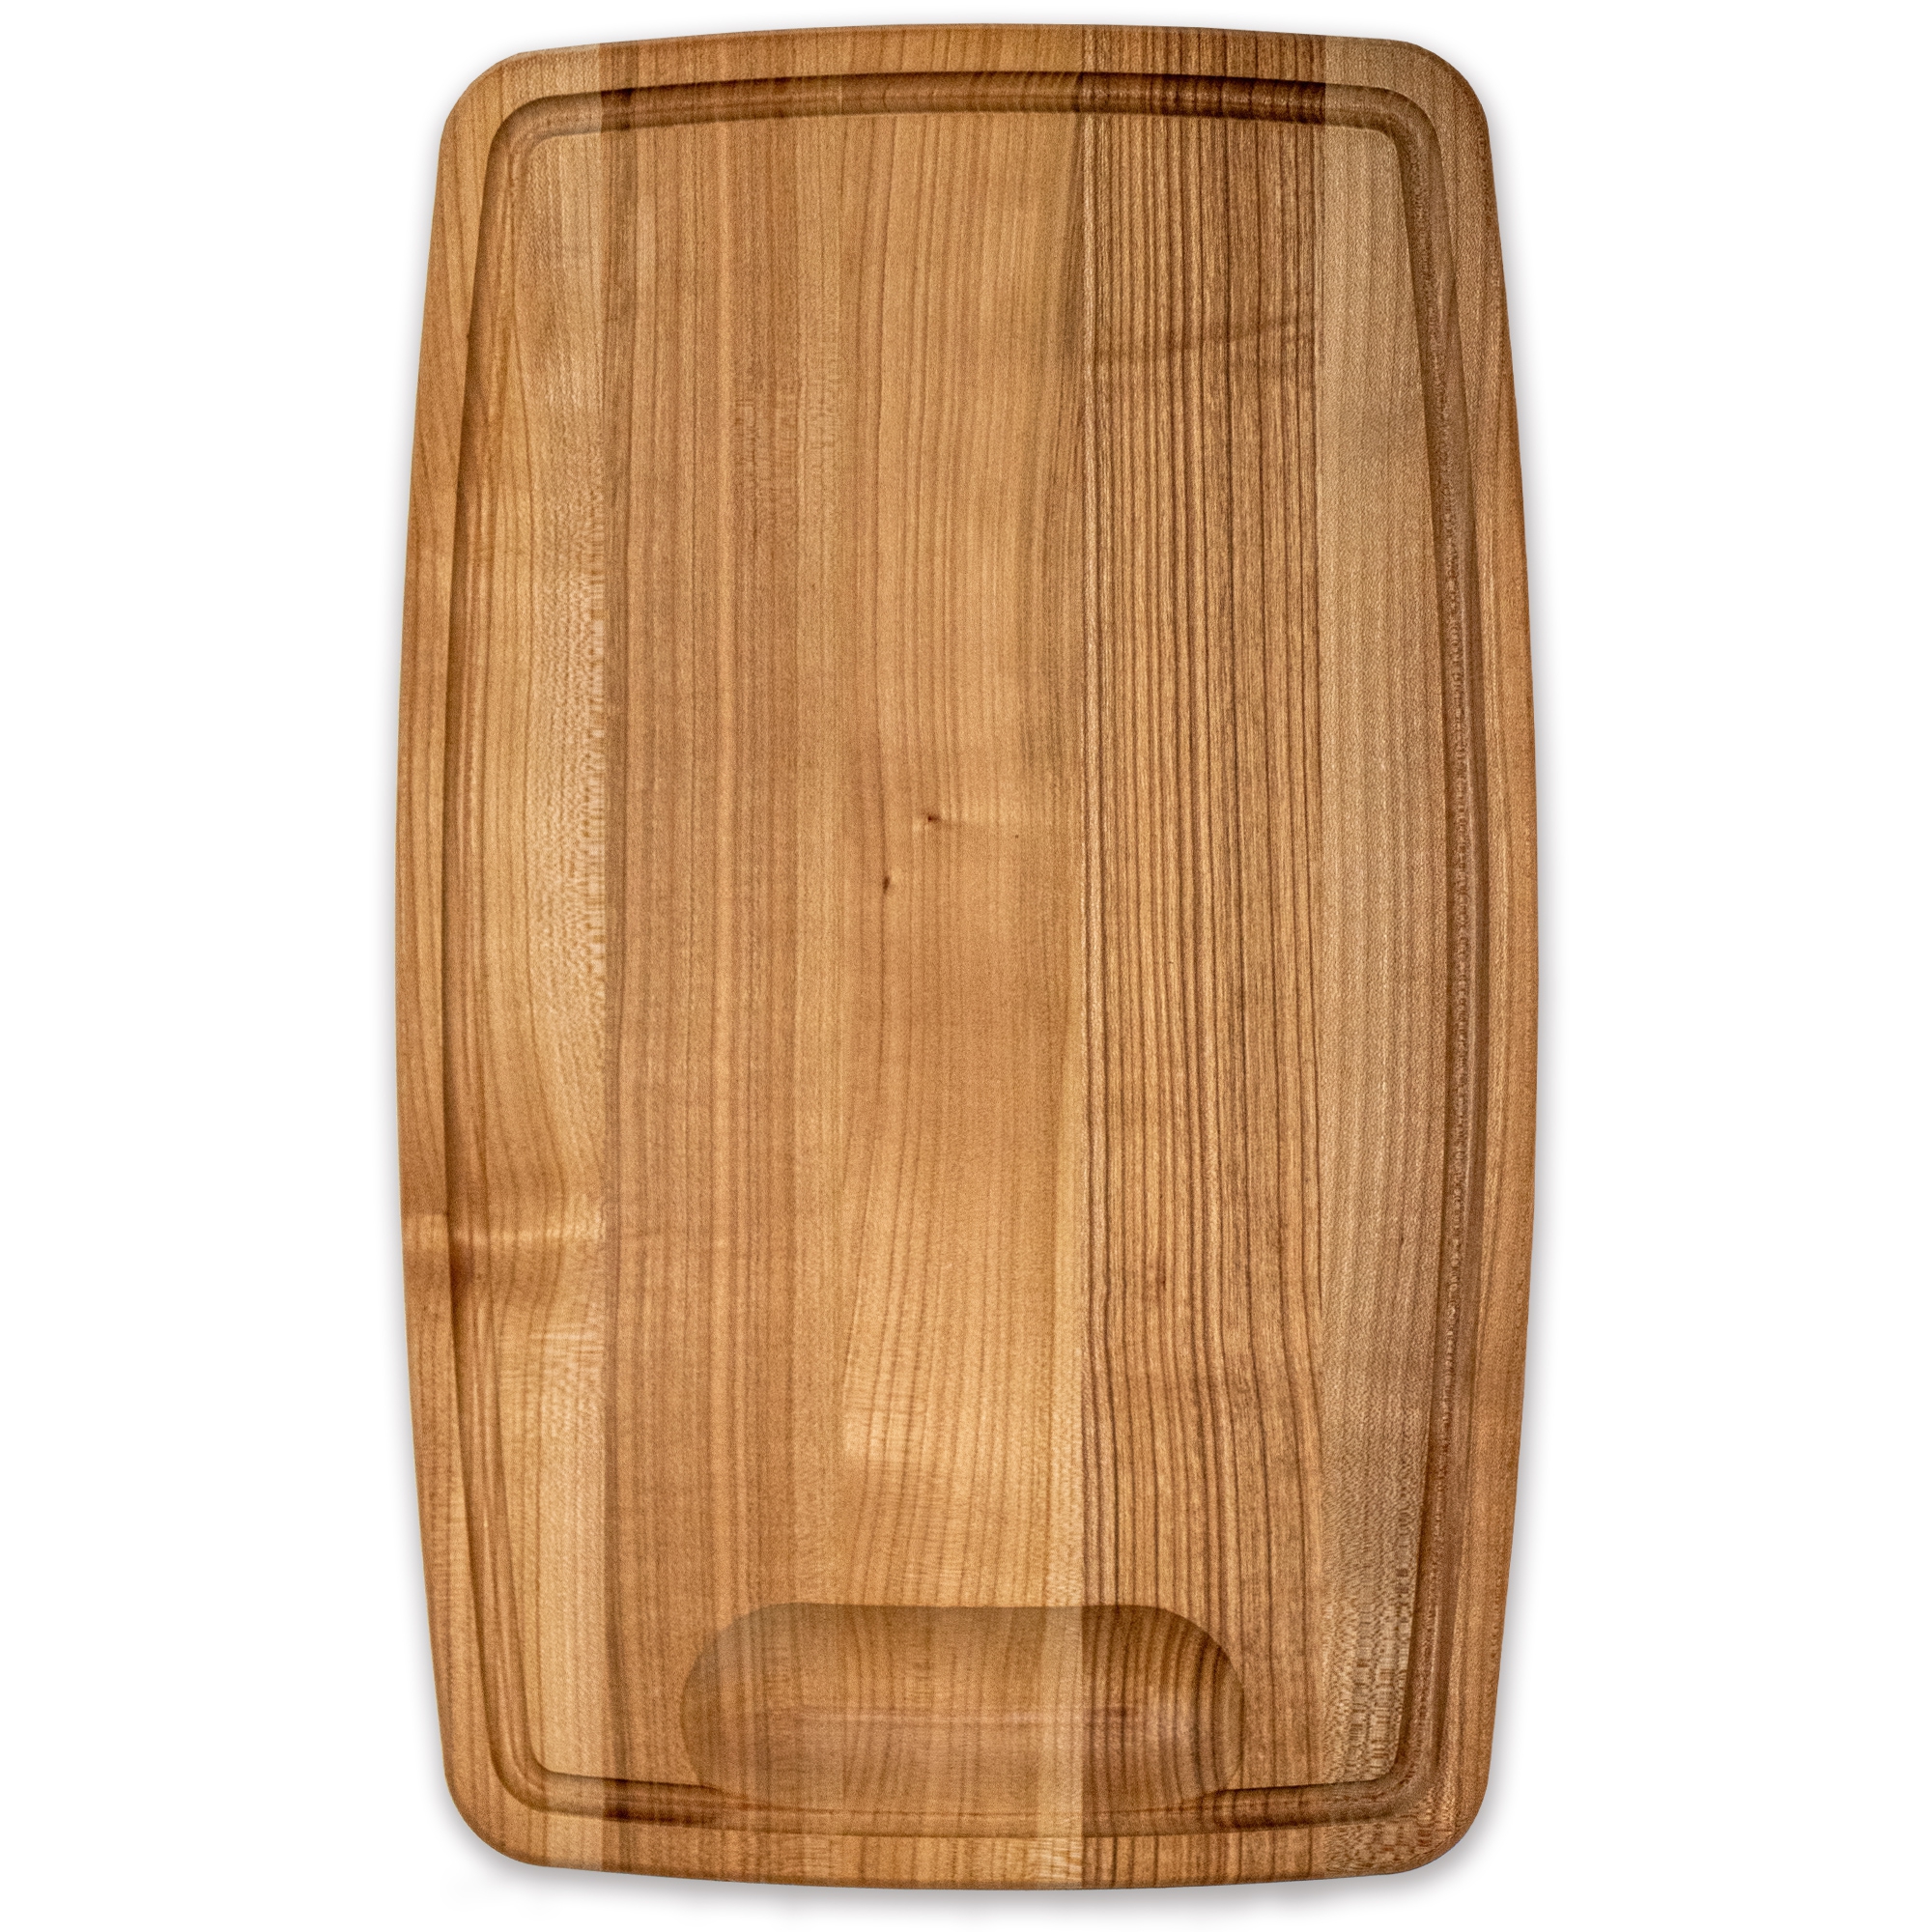 Culinaris - Cherry wood board with groove 45x28x2,5 cm